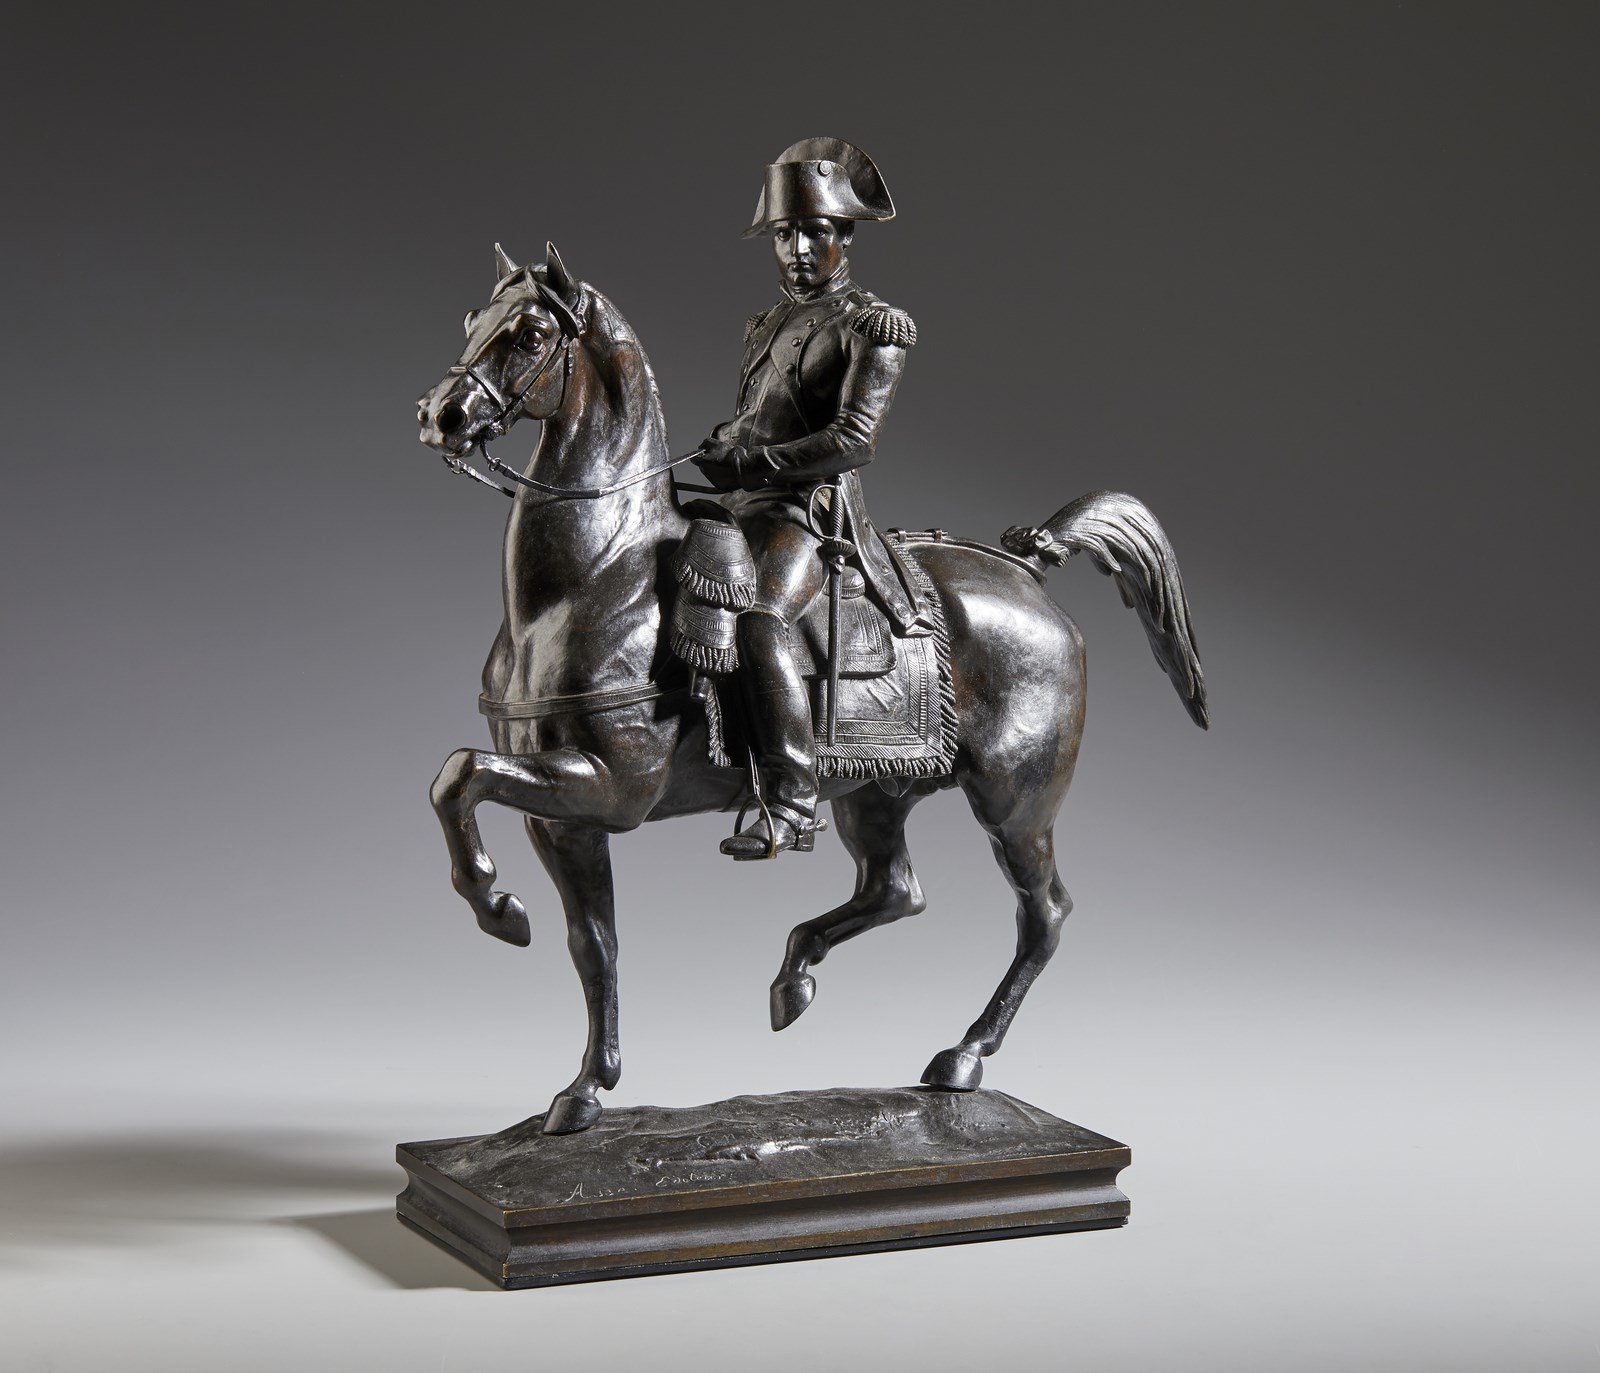 Napoleon on horseback (Carlo Marochetti)